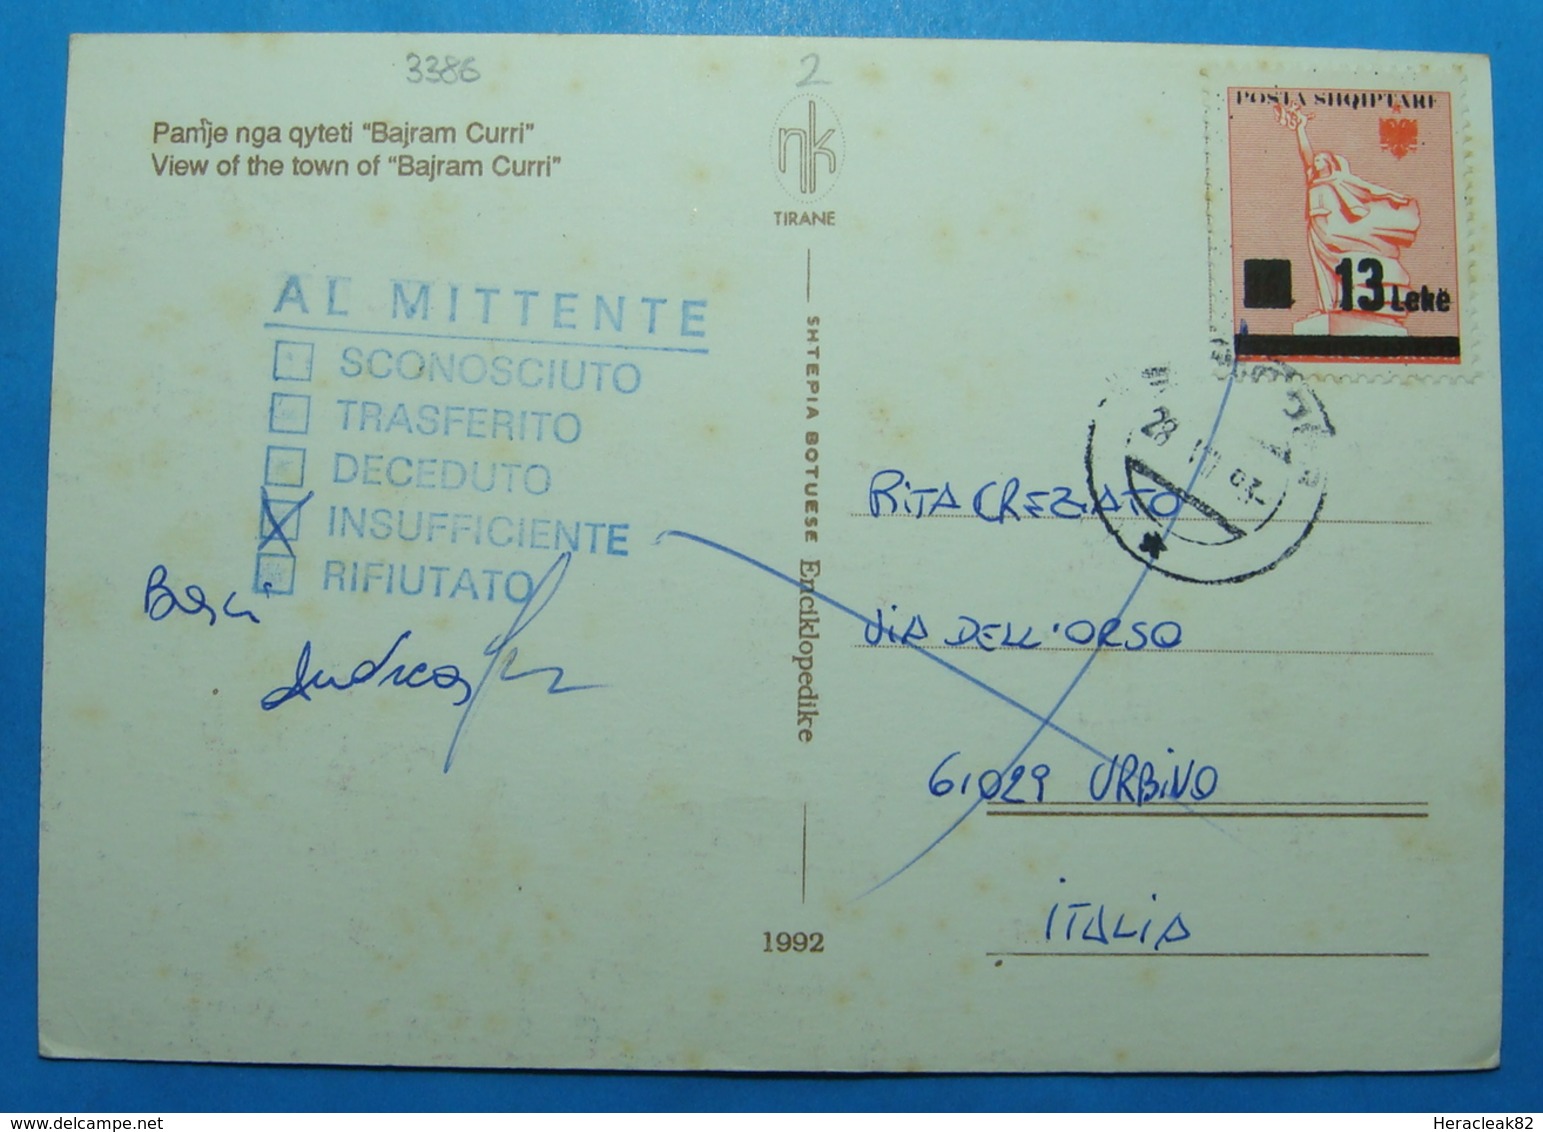 1993 ALBANIA Postcard BAJRAM CURRI Sent From Shkoder To URBINO Italia, Returrned, ADRESSE INSUFFICIENTE RARE - Albanië